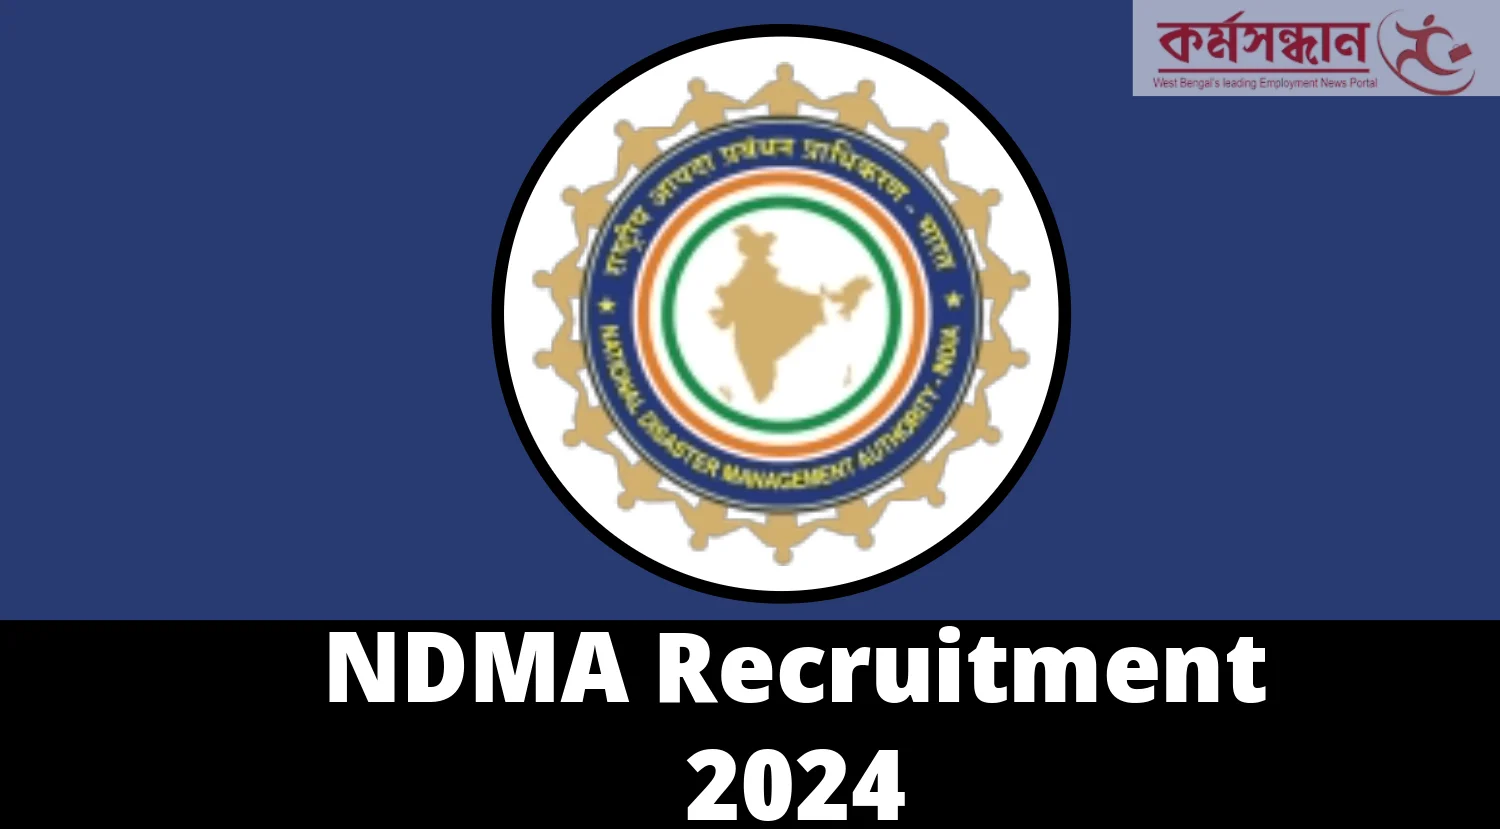 NDMA PAC - ND Medical Association